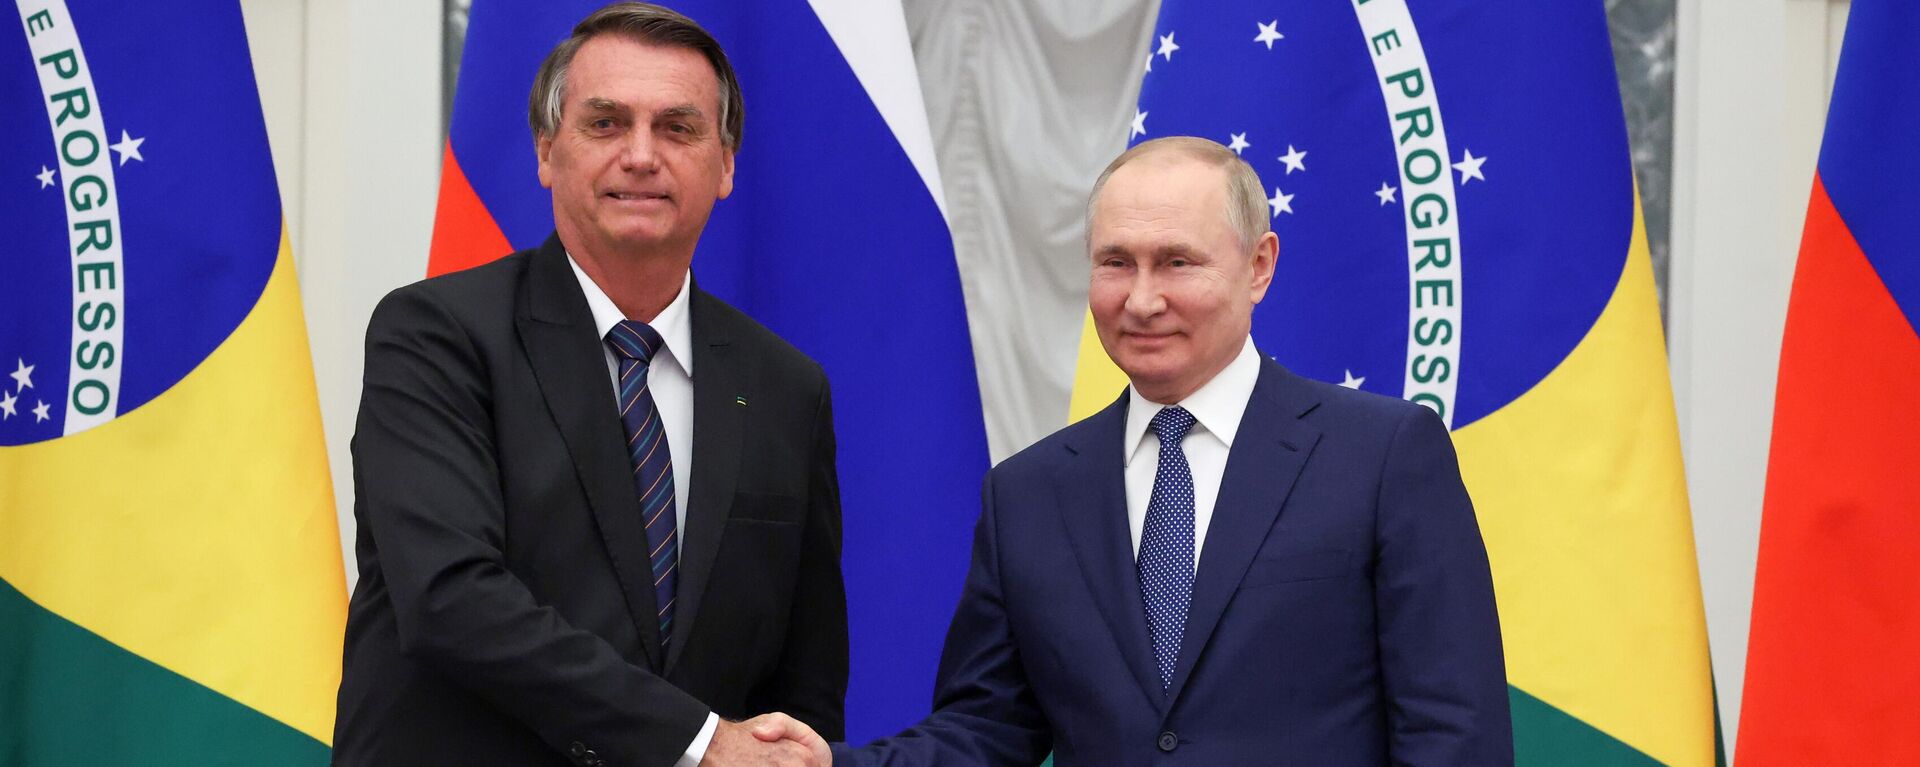 Los presidentes de Brasil y de Rusia, Jair Bolsonaro y Vladímir Putin  - Sputnik Mundo, 1920, 16.02.2022